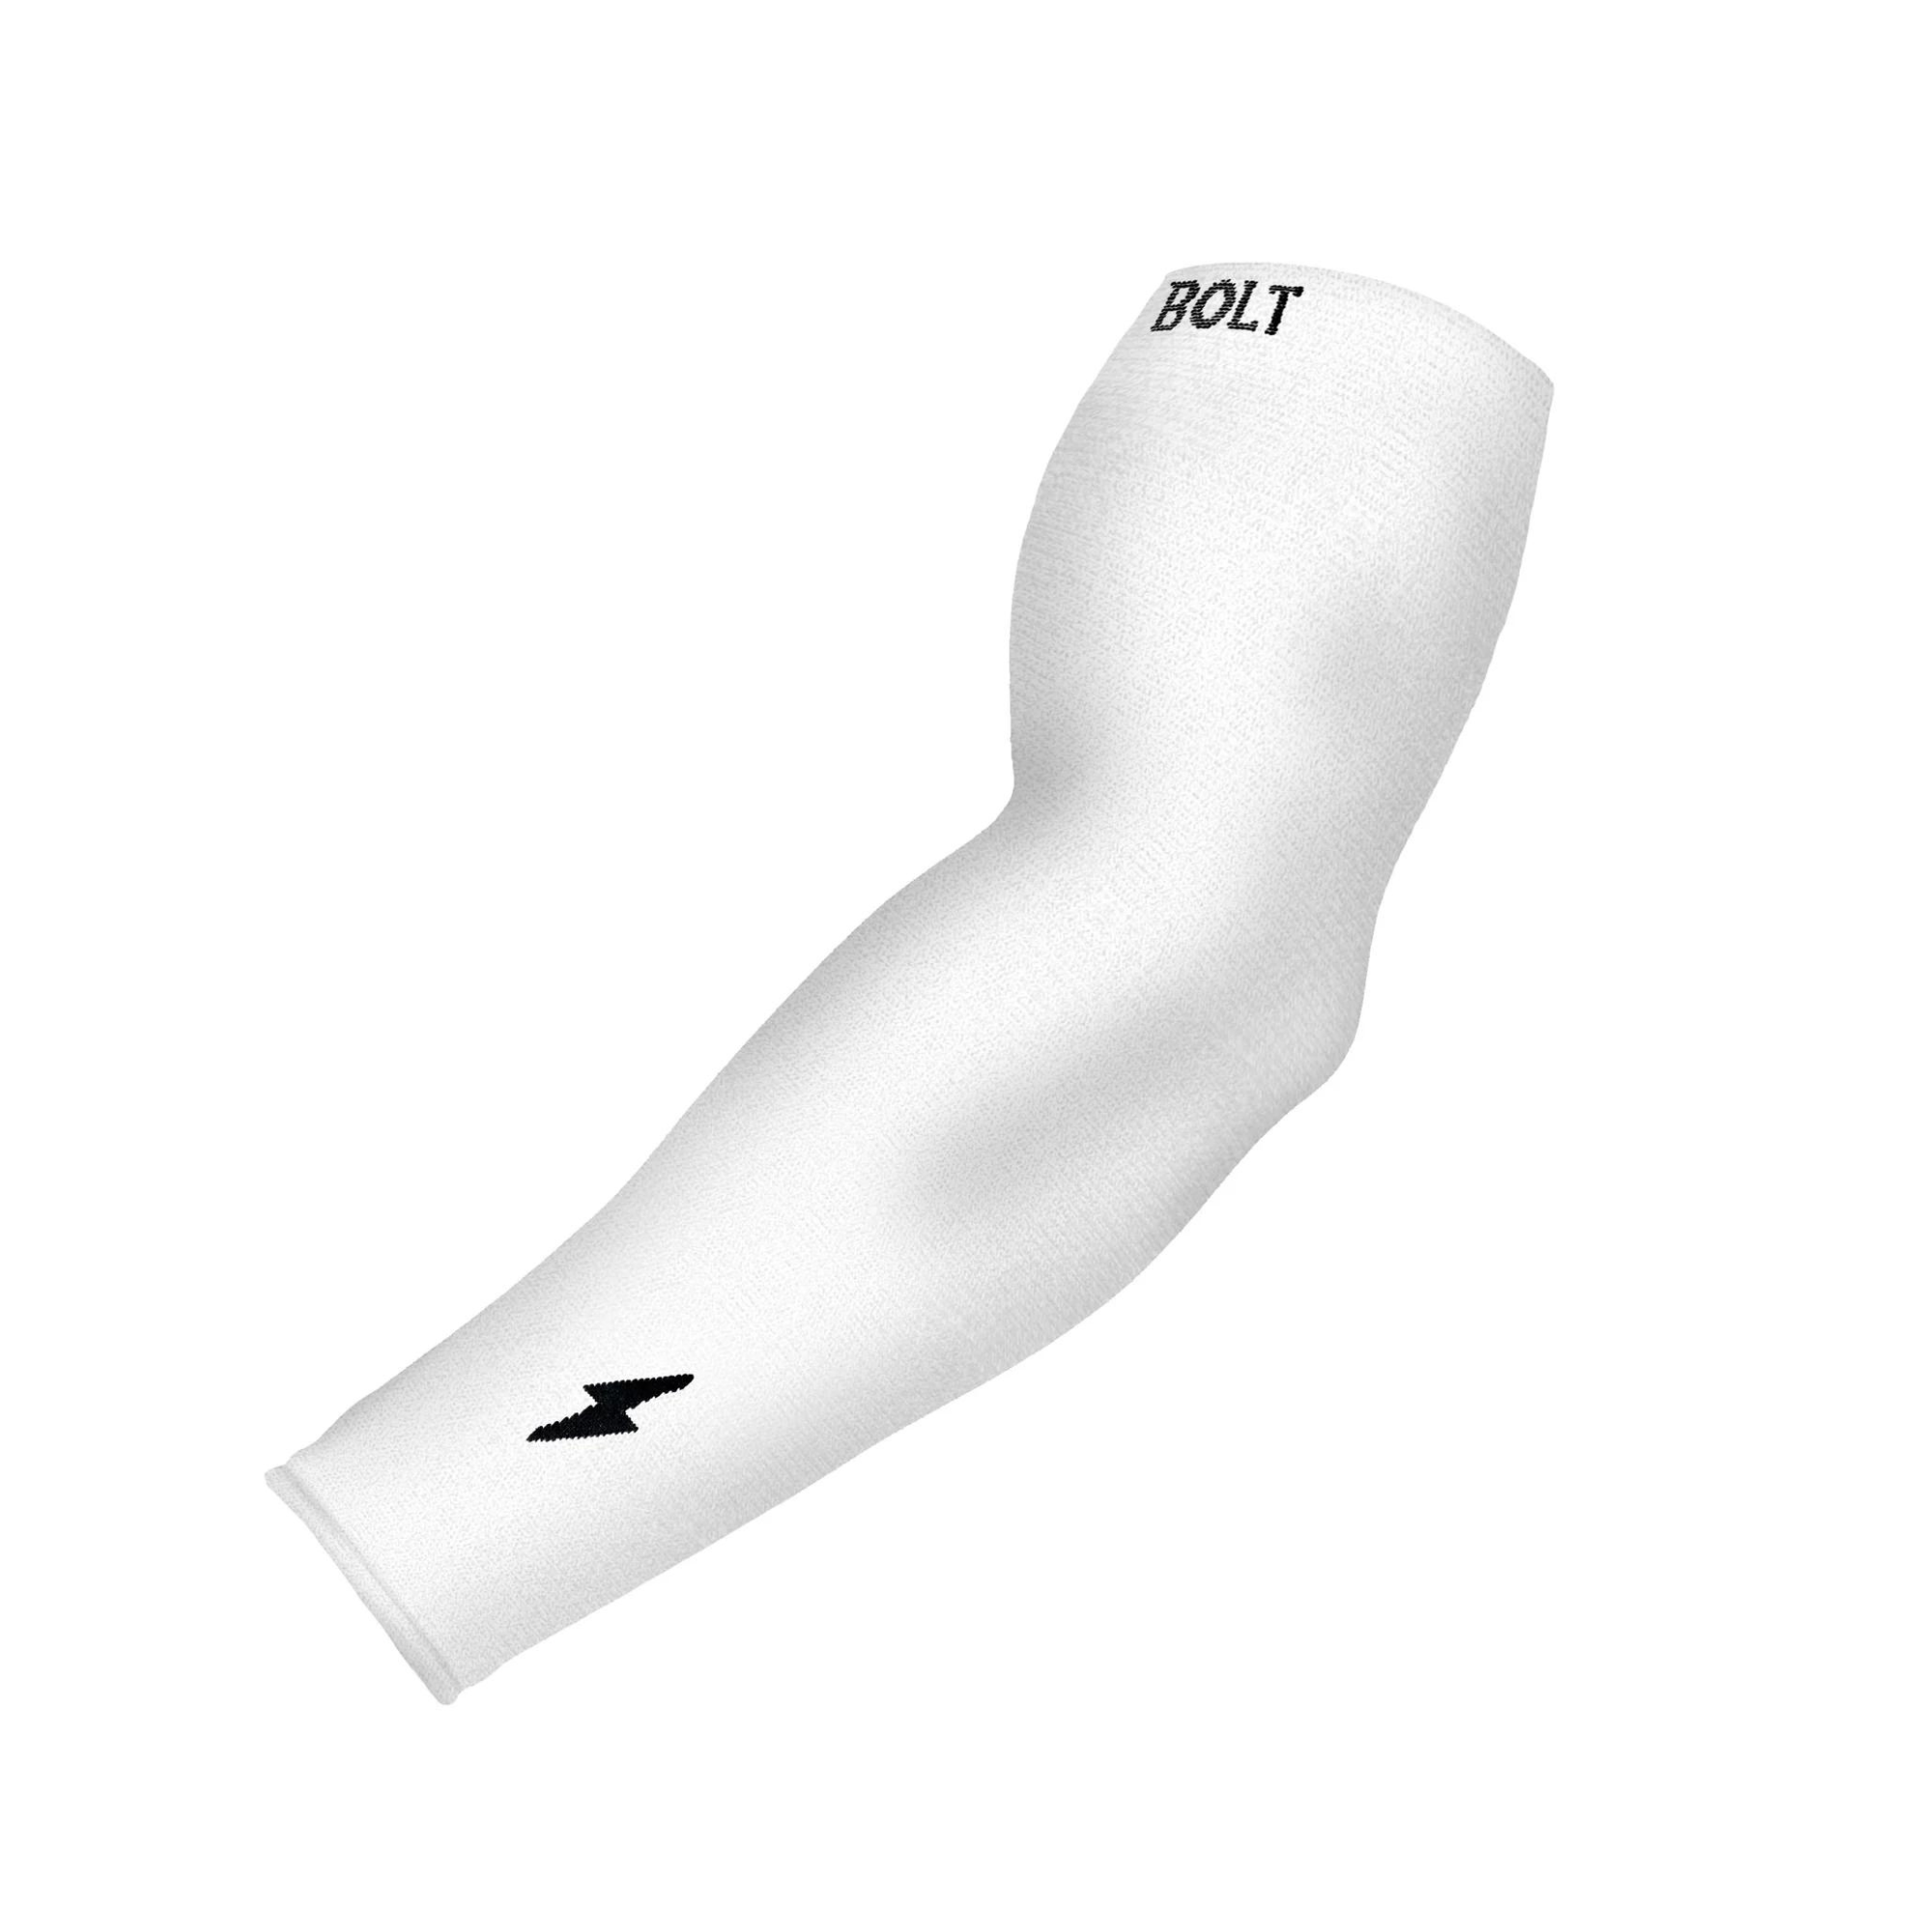 Bruce Bolt Graduated Compression Premium Arm Sleeve White